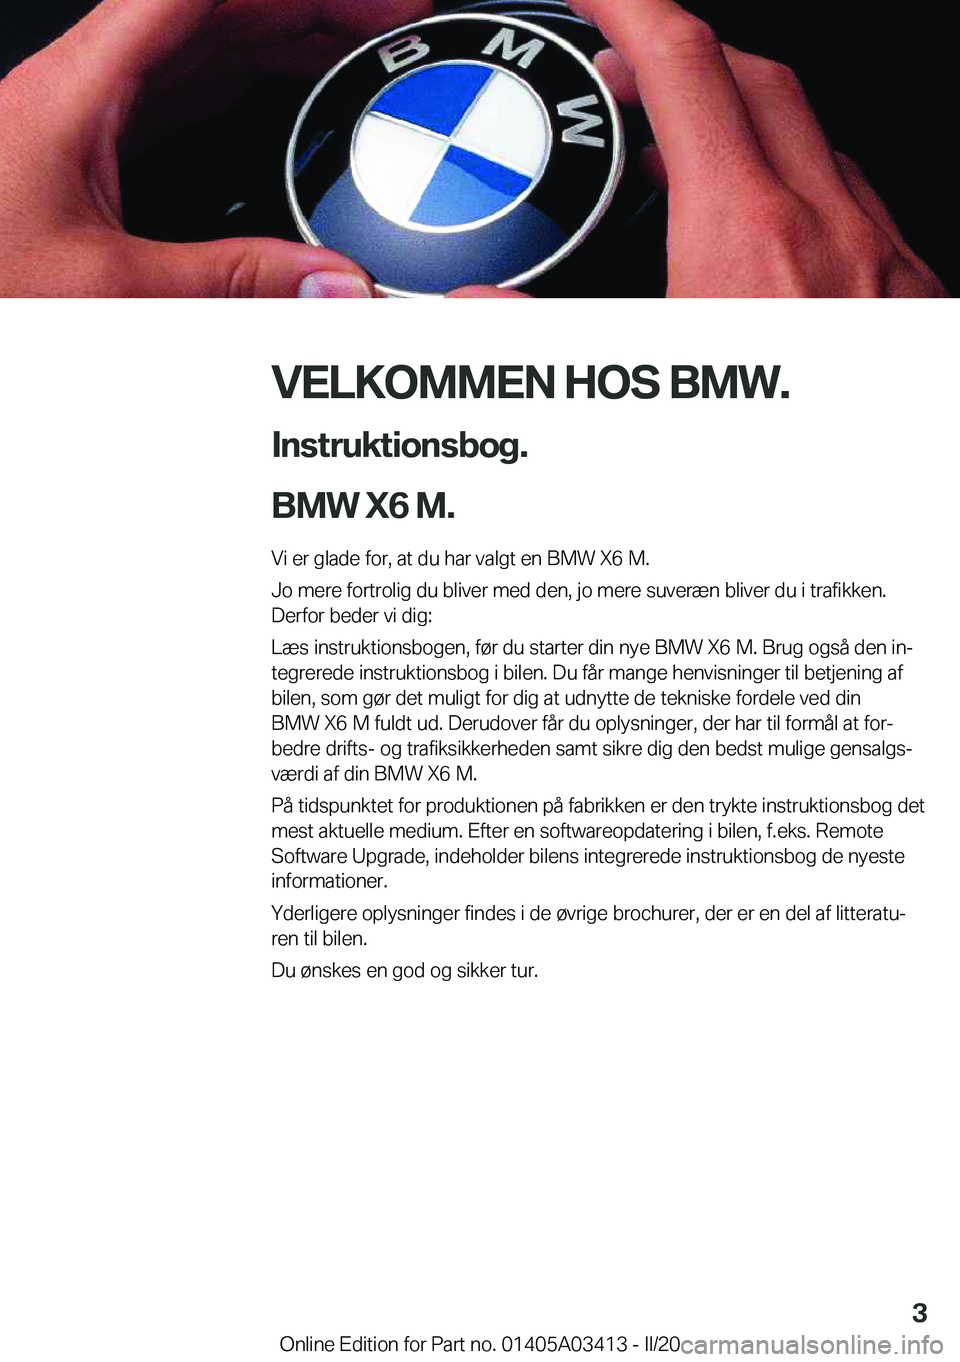 BMW X6 M 2020  InstruktionsbØger (in Danish) �V�E�L�K�O�M�M�E�N��H�O�S��B�M�W�.
�I�n�s�t�r�u�k�t�i�o�n�s�b�o�g�.
�B�M�W��X�6��M�. �V�i��e�r��g�l�a�d�e��f�o�r�,��a�t��d�u��h�a�r��v�a�l�g�t��e�n��B�M�W��X�6��M�.
�J�o��m�e�r�e��f�o